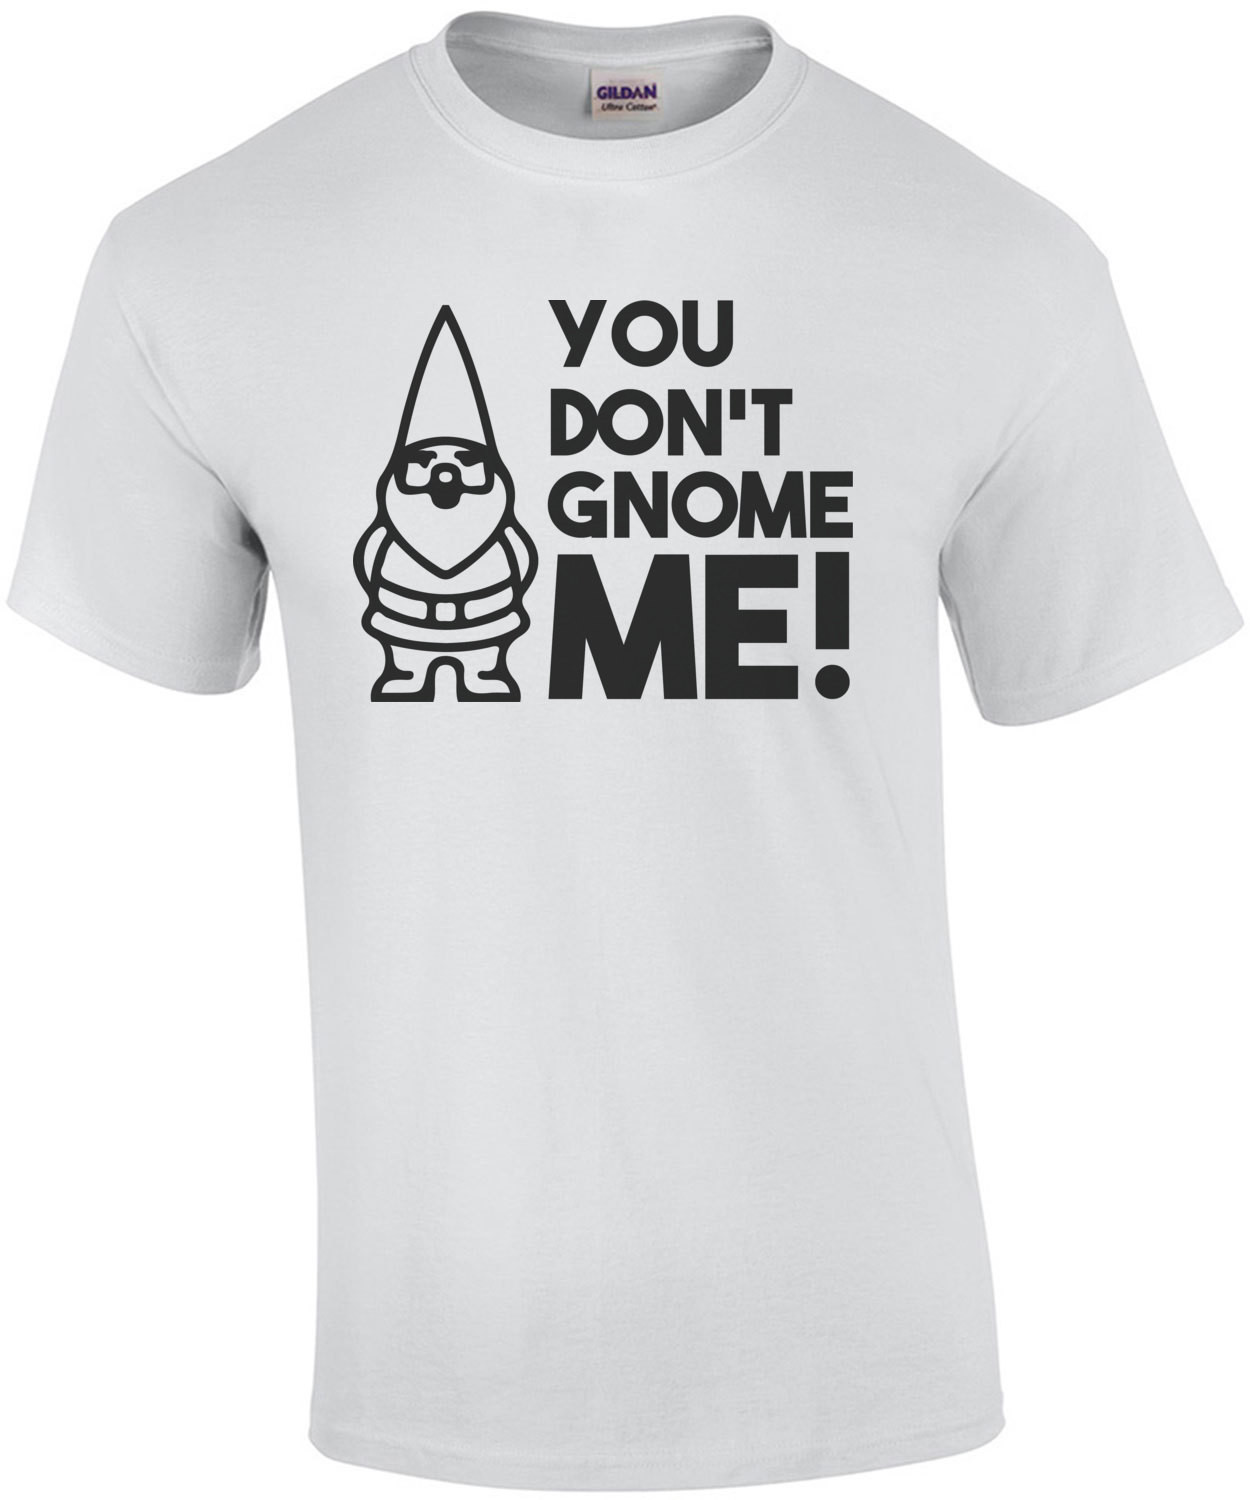 You don't gnome me! T-Shirt